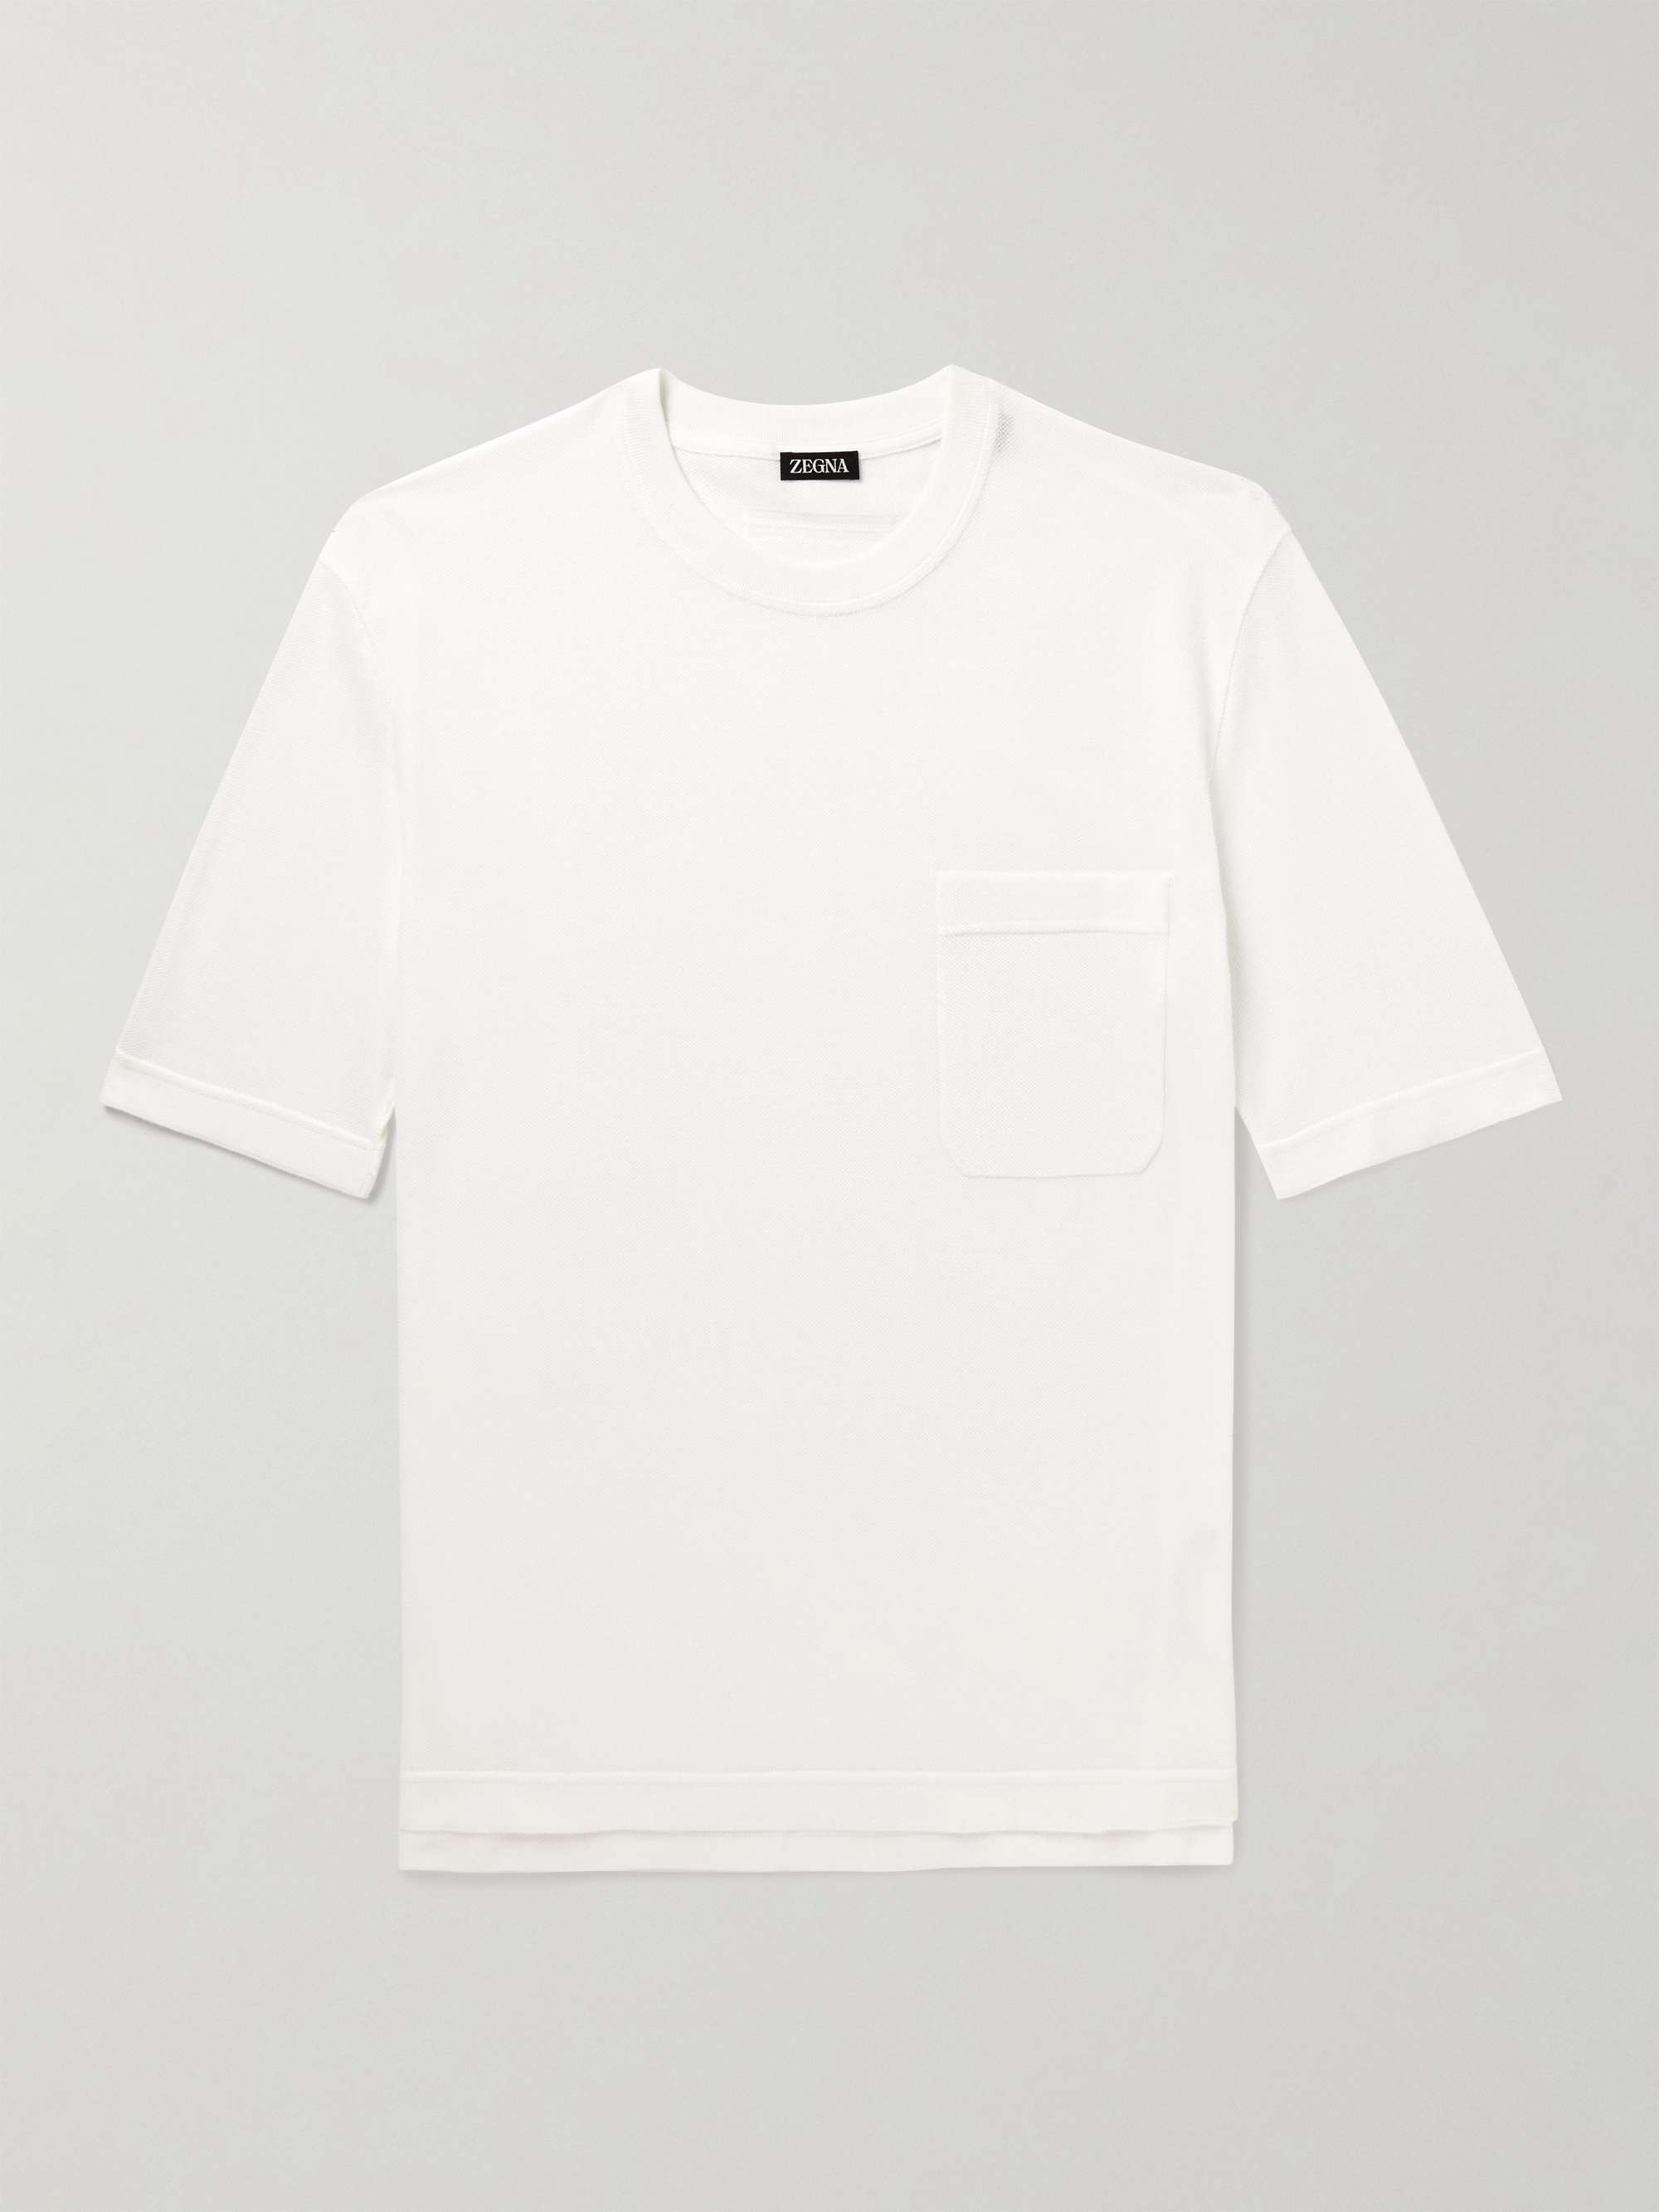 Louis Vuitton, Shirts, Black Signature 3d Pocket Monogram Tshirt